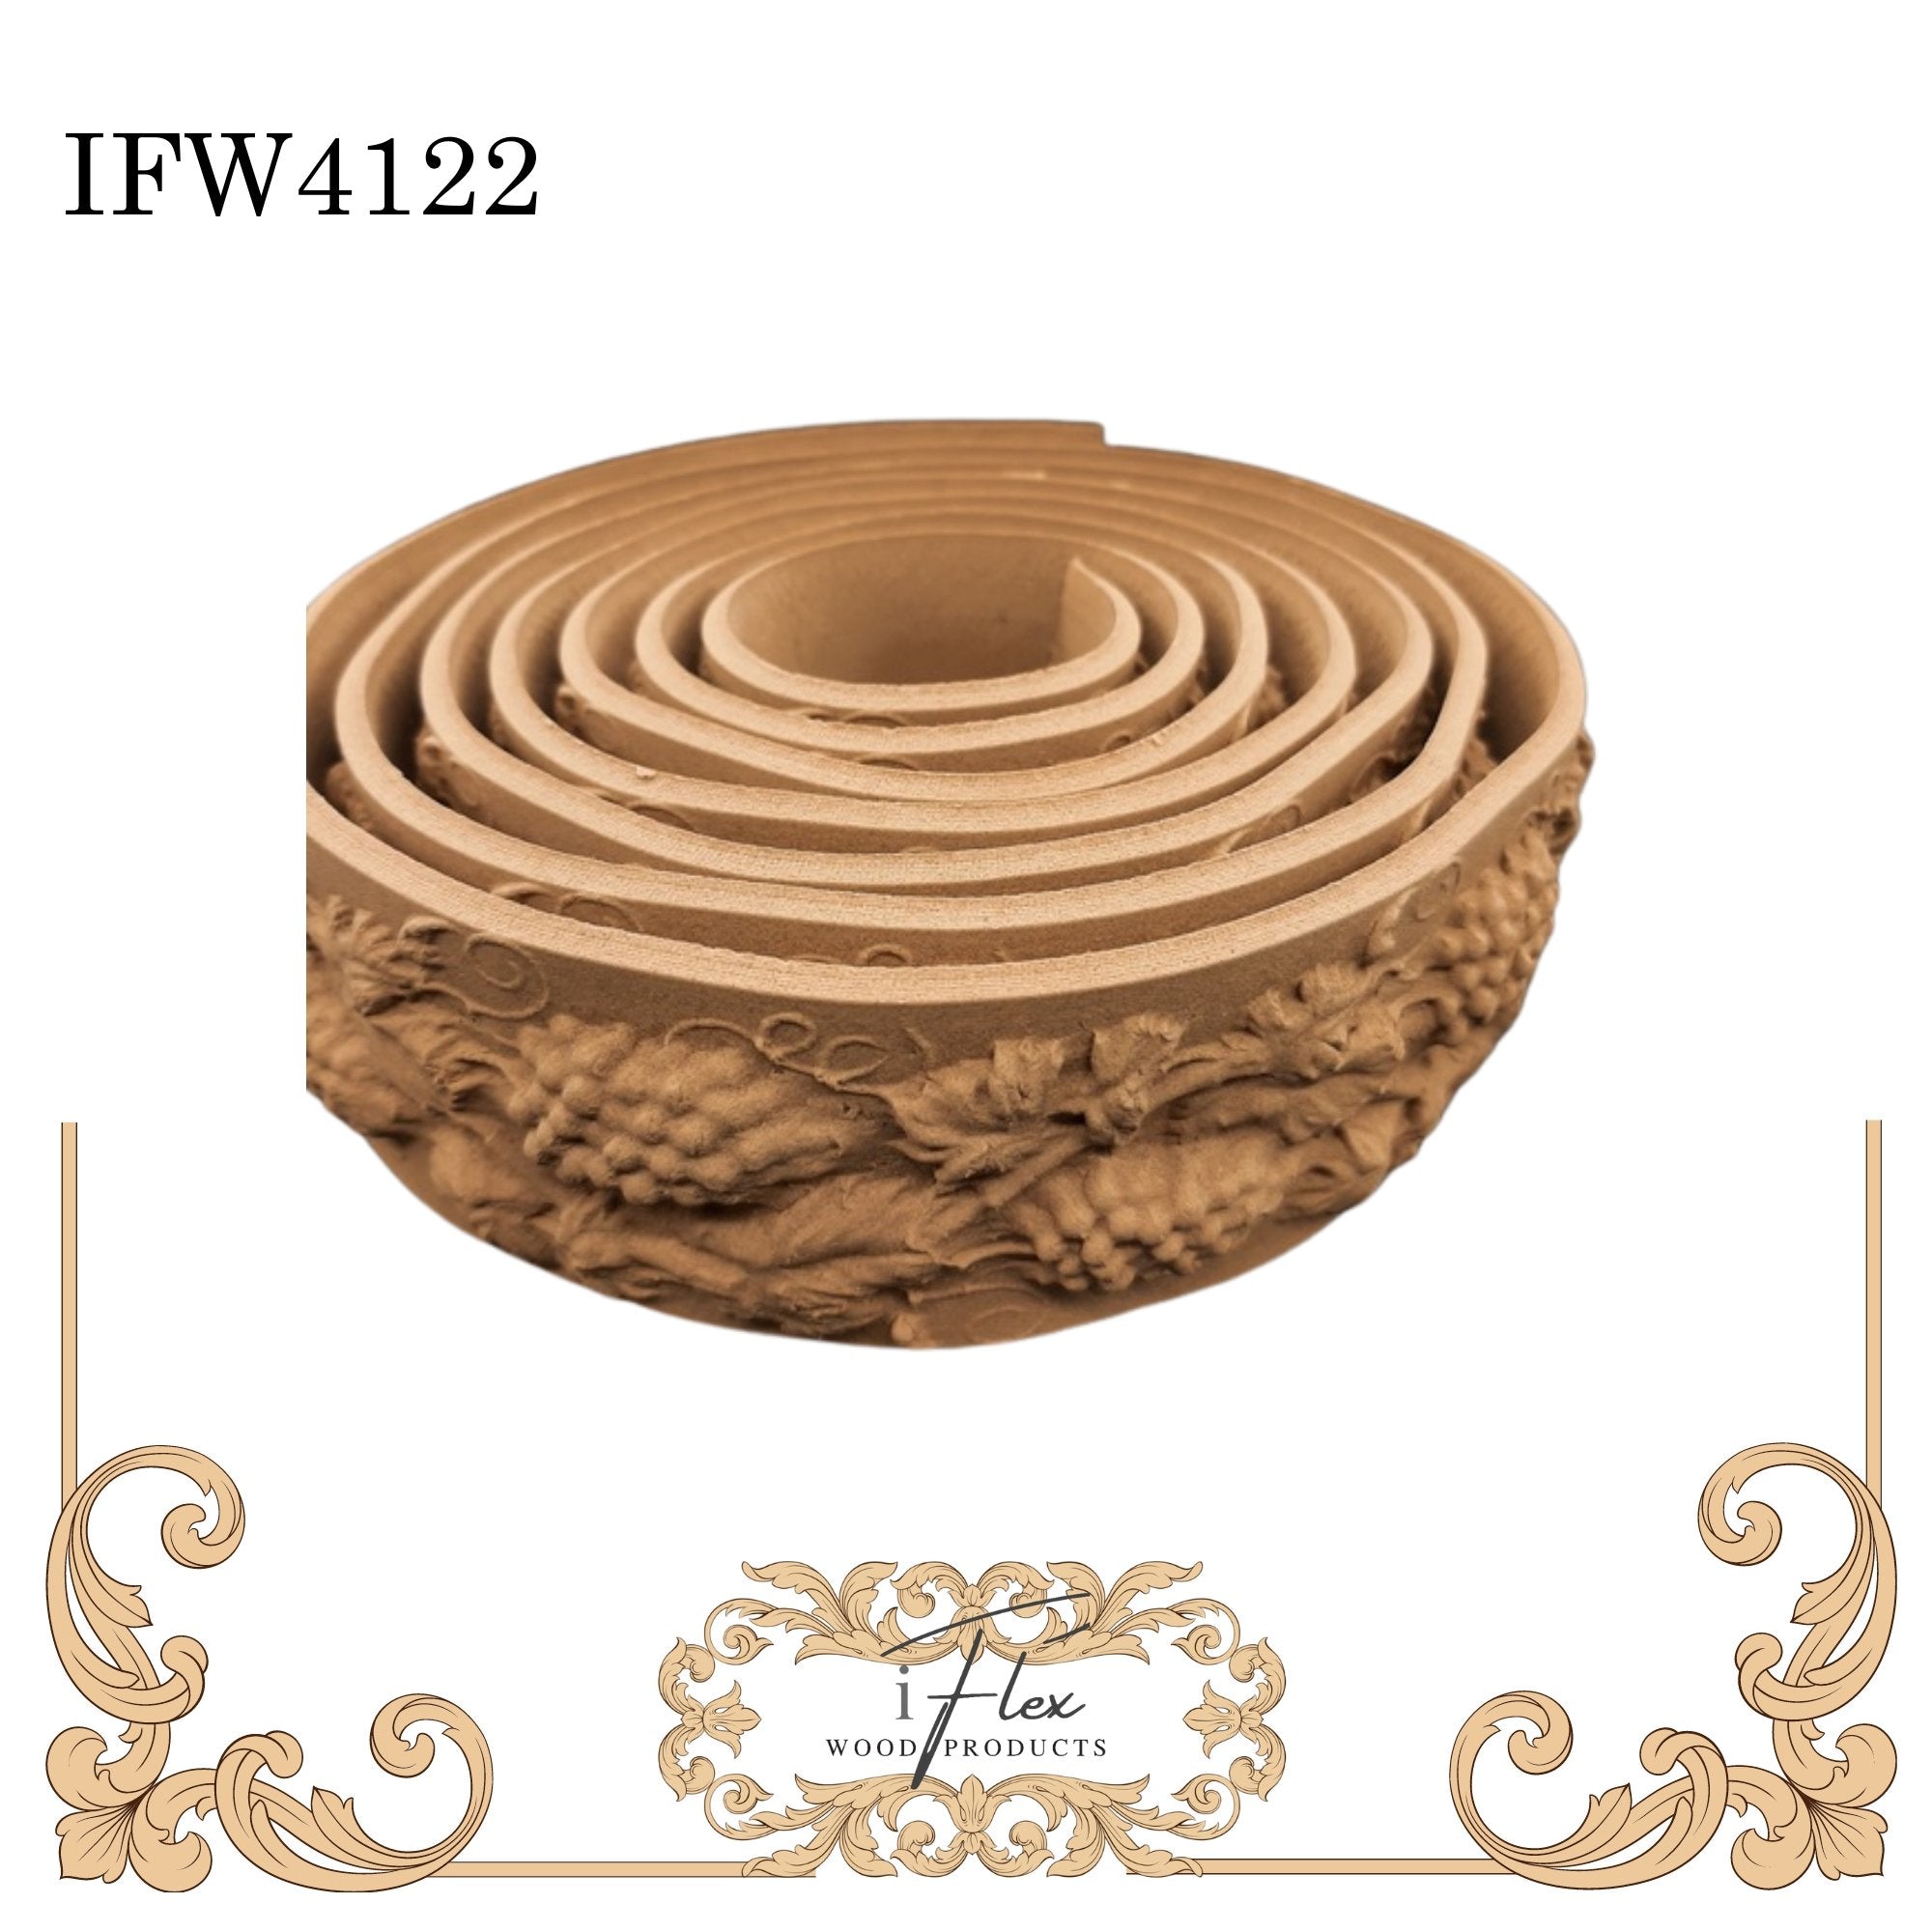 Scroll Trim Heat Bendable Wood Trim Iflex Wood Products IFW 4124 Bendable Wood  Trim, Ornate Trim, Heat Flexible Trim Embellishment 